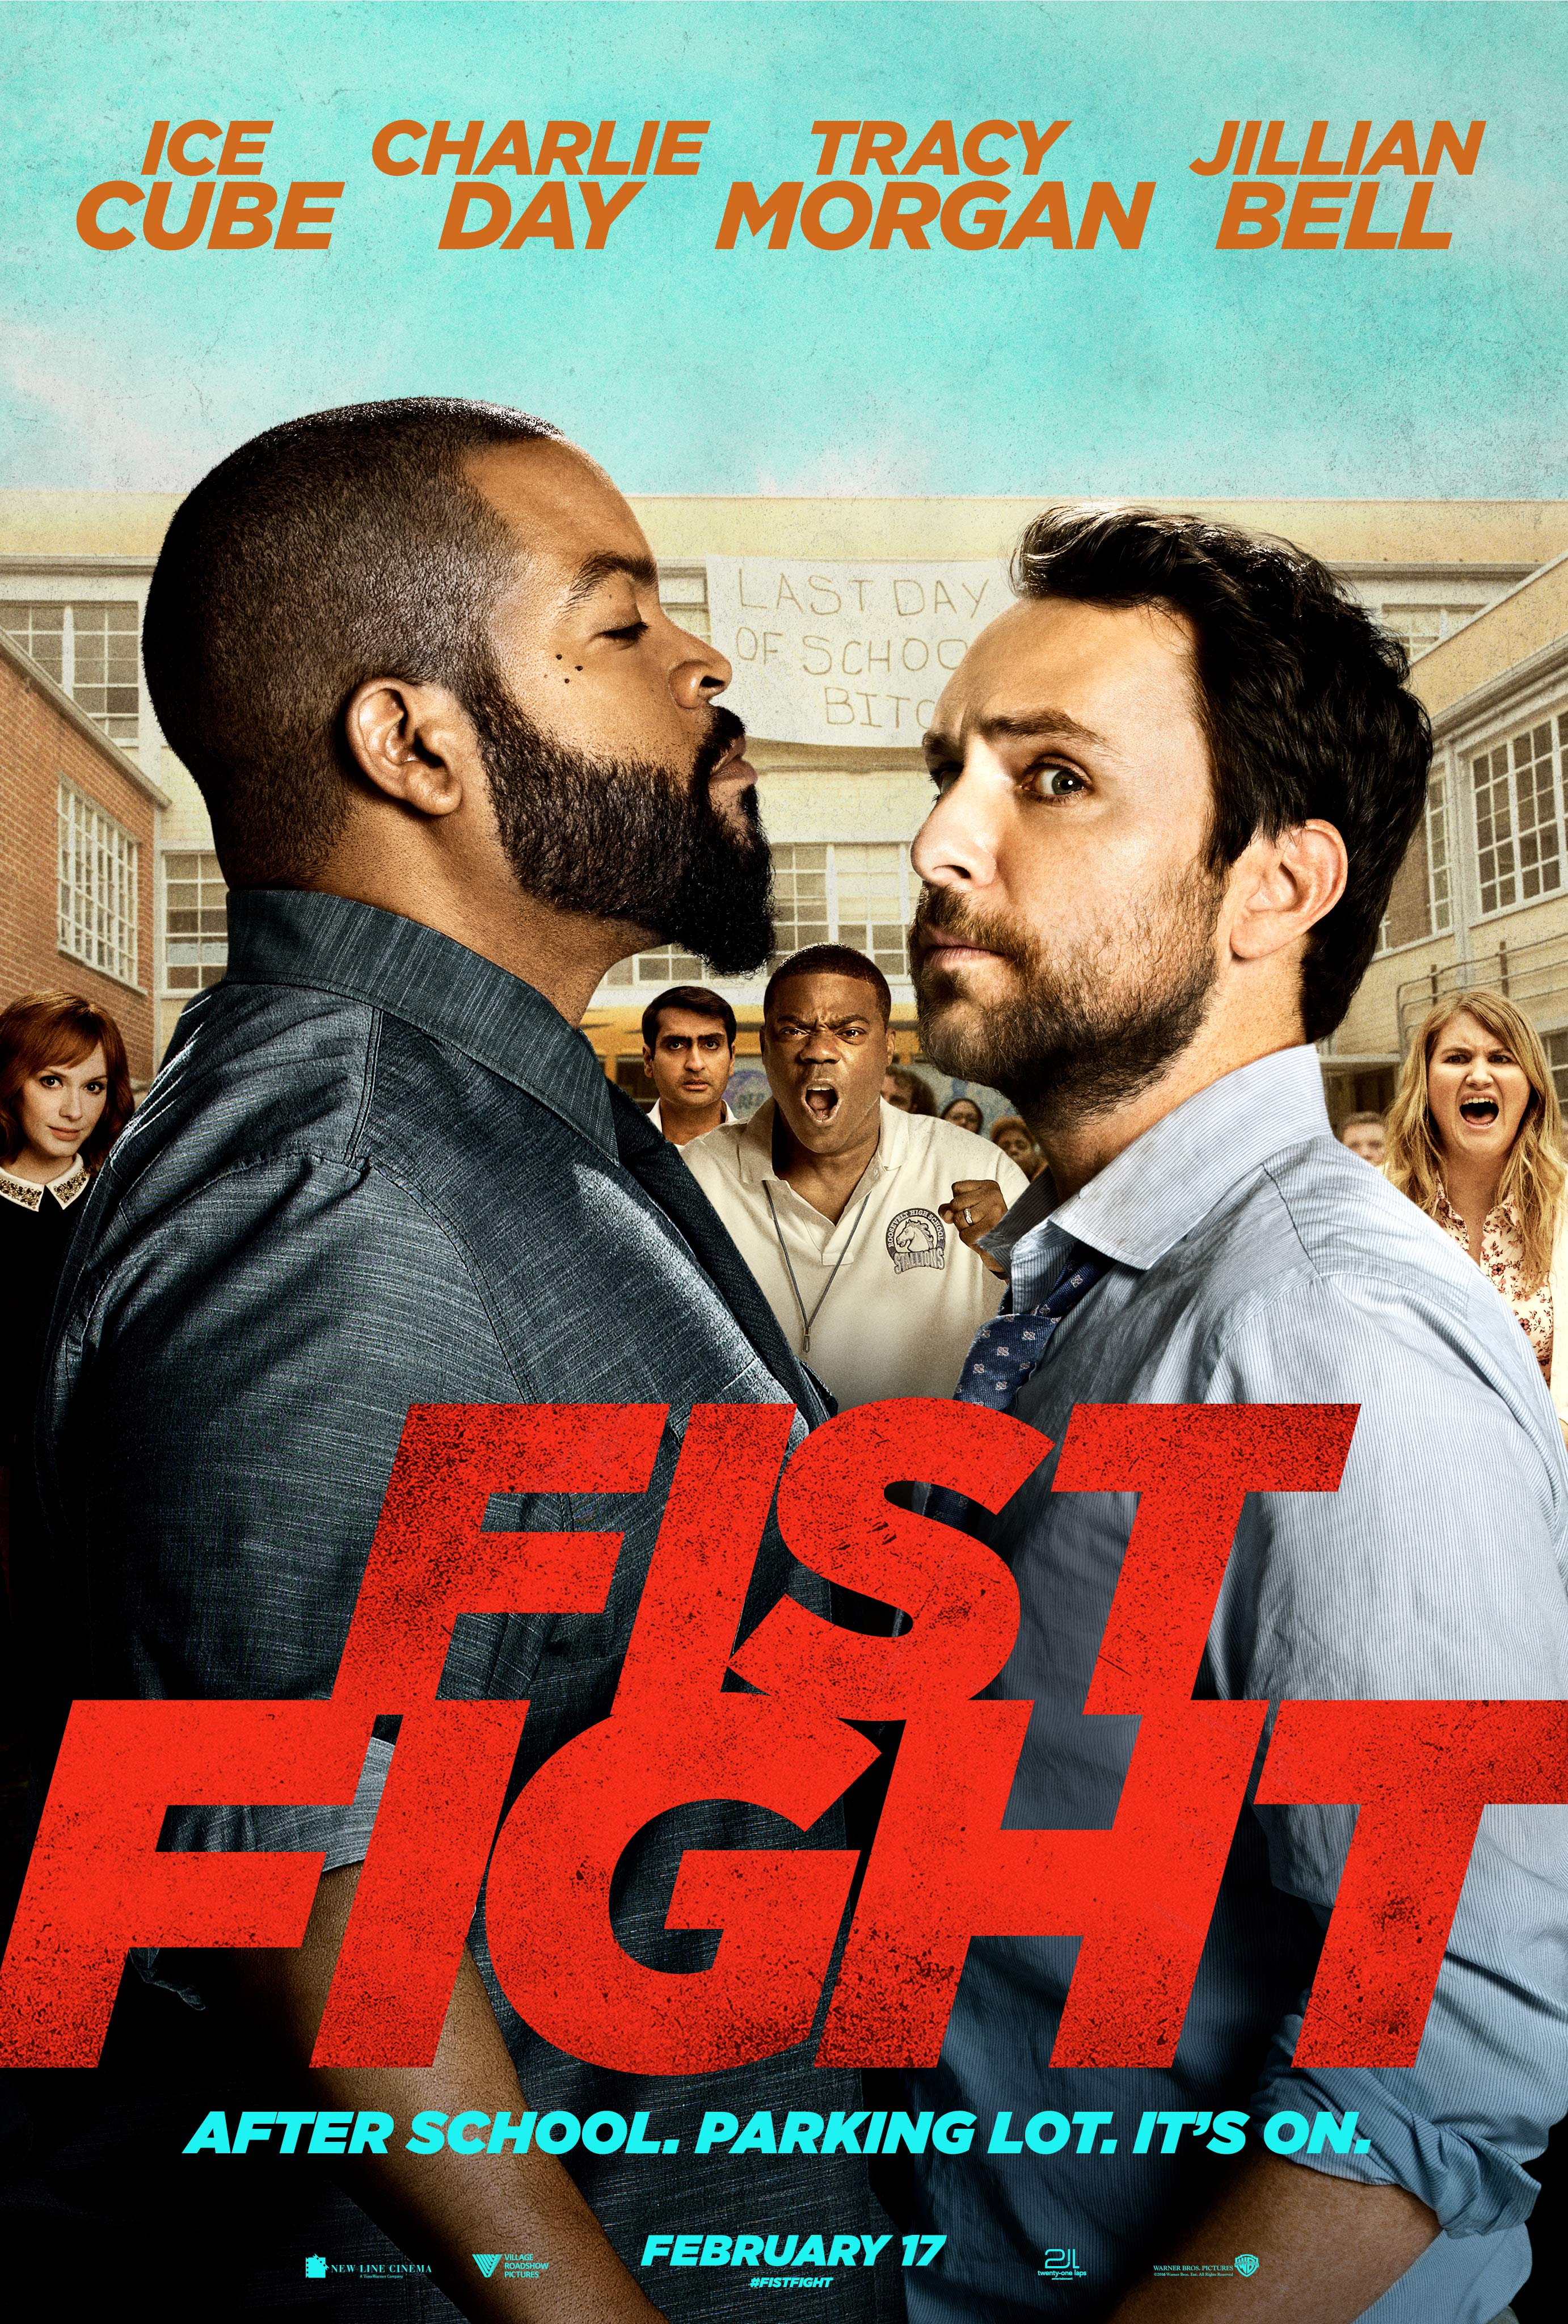 Watch Movie Fist Fight Full HD